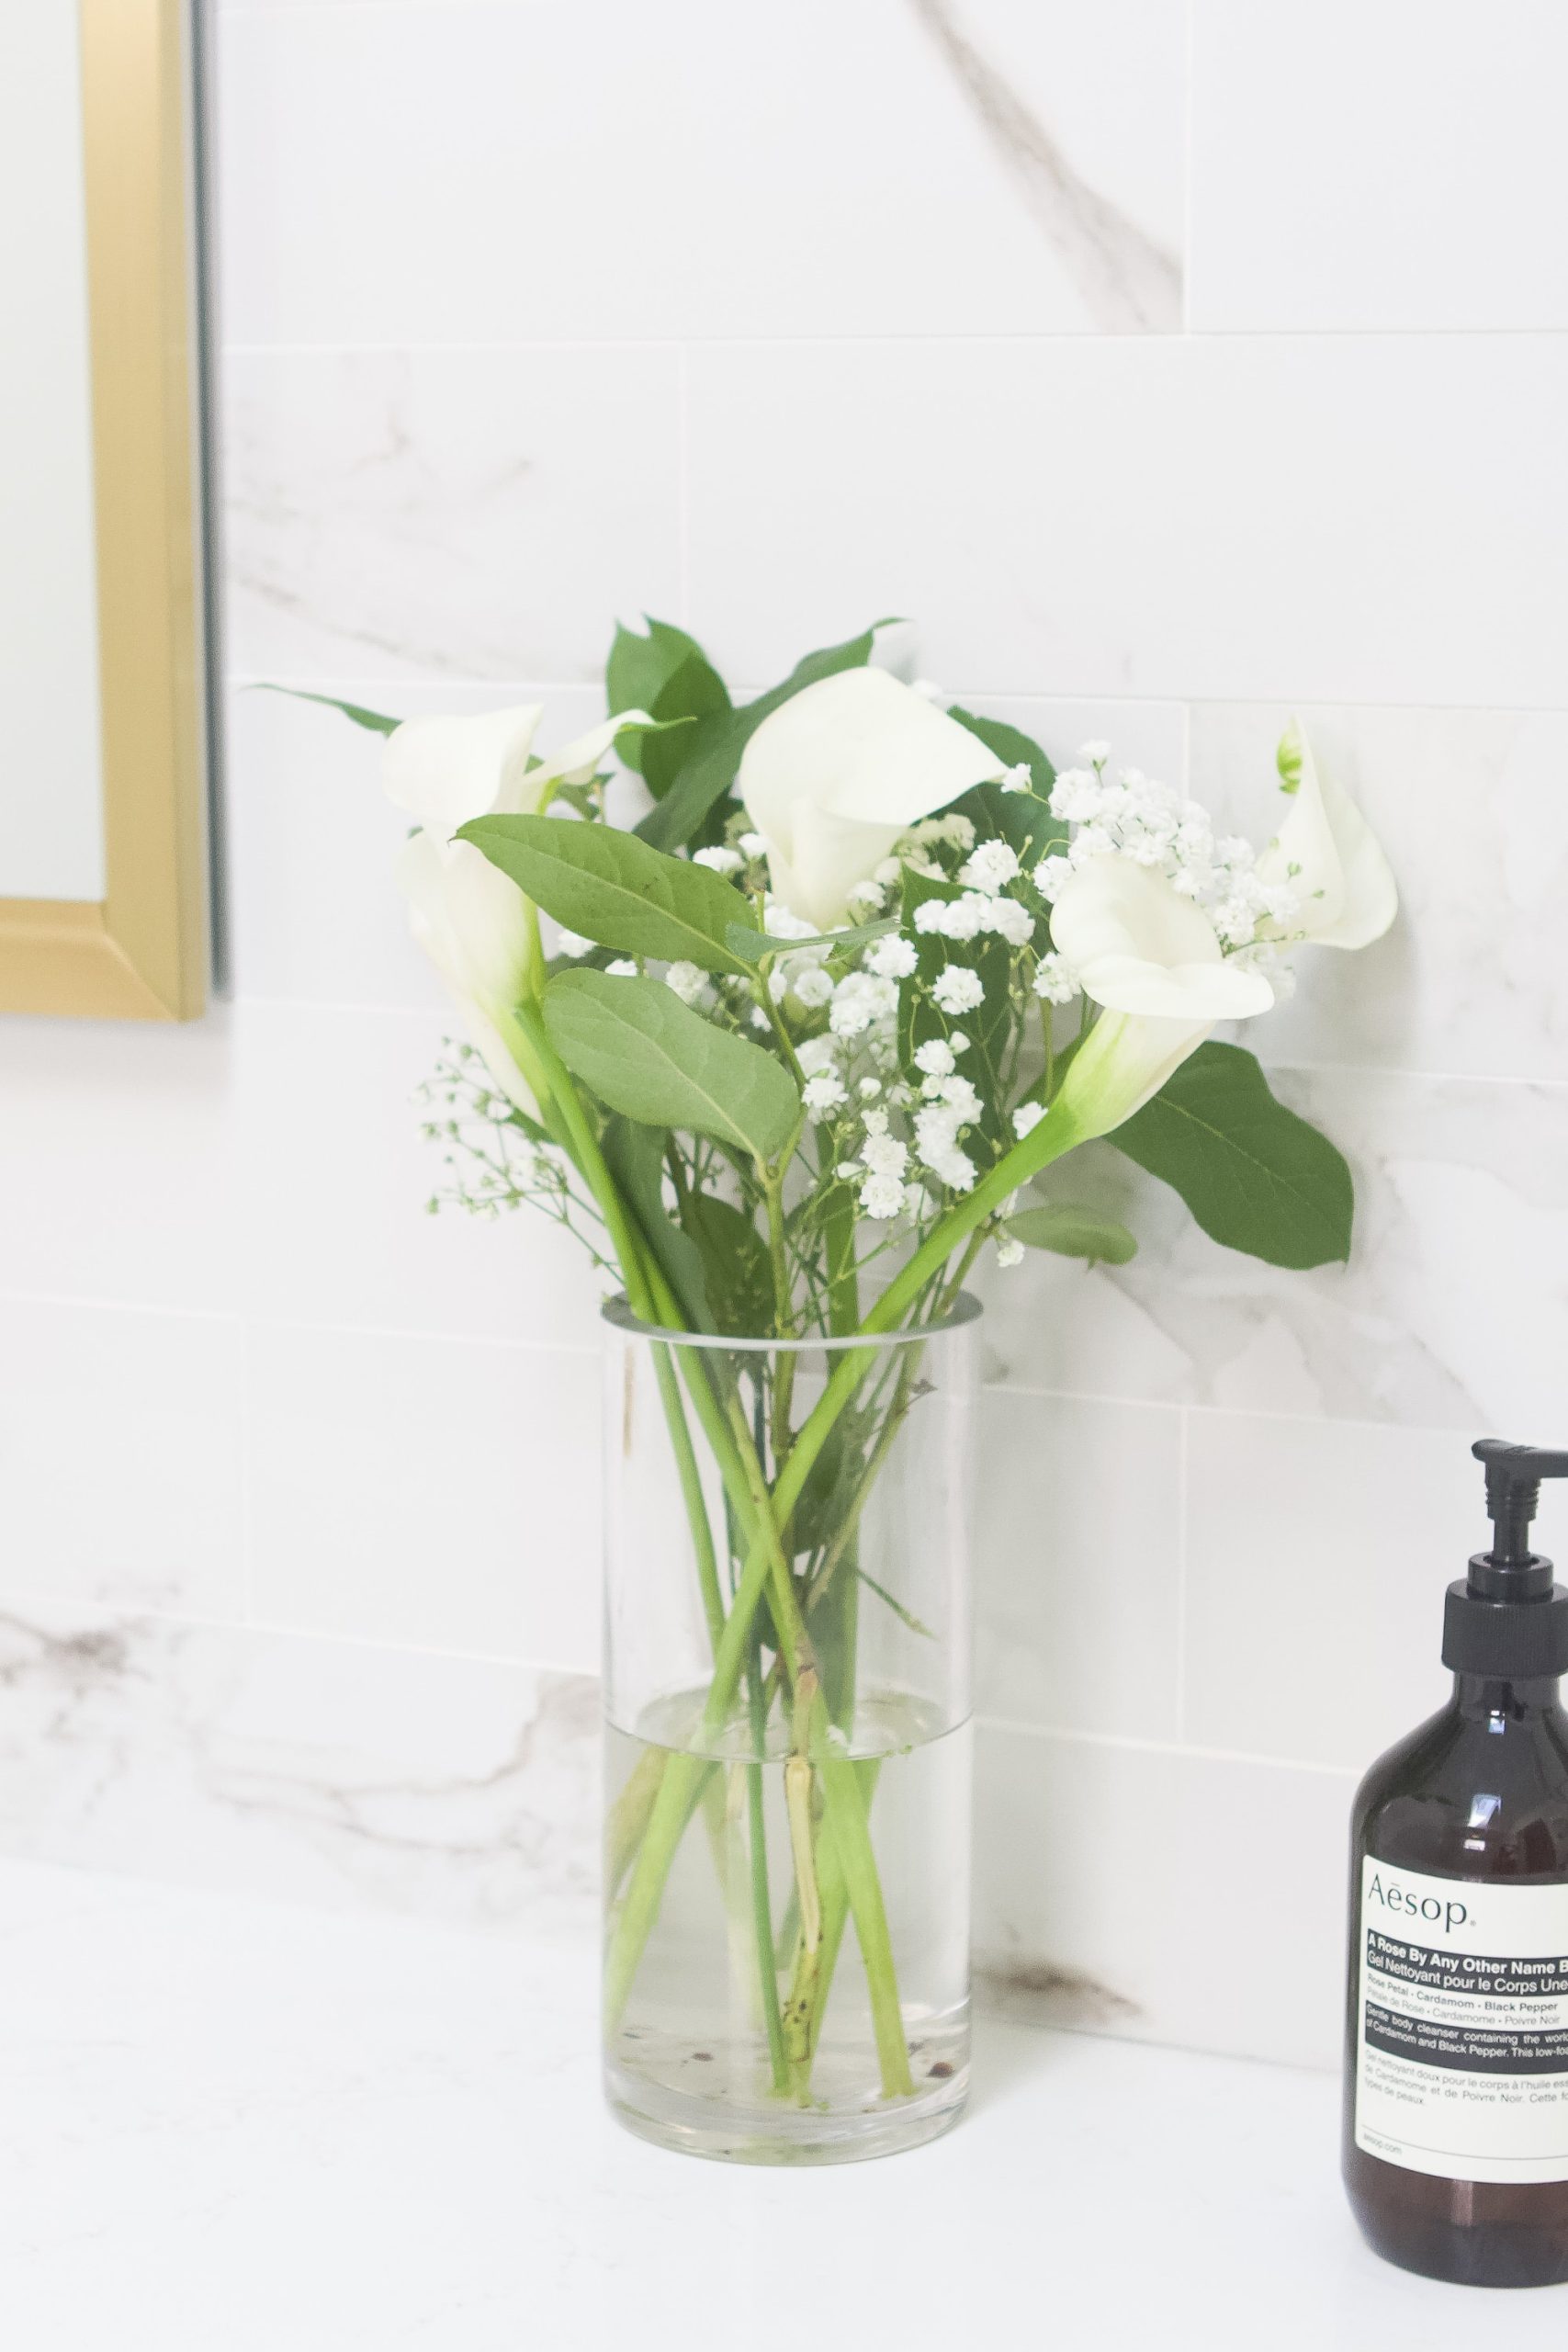 Flowers on a bathroom vanity